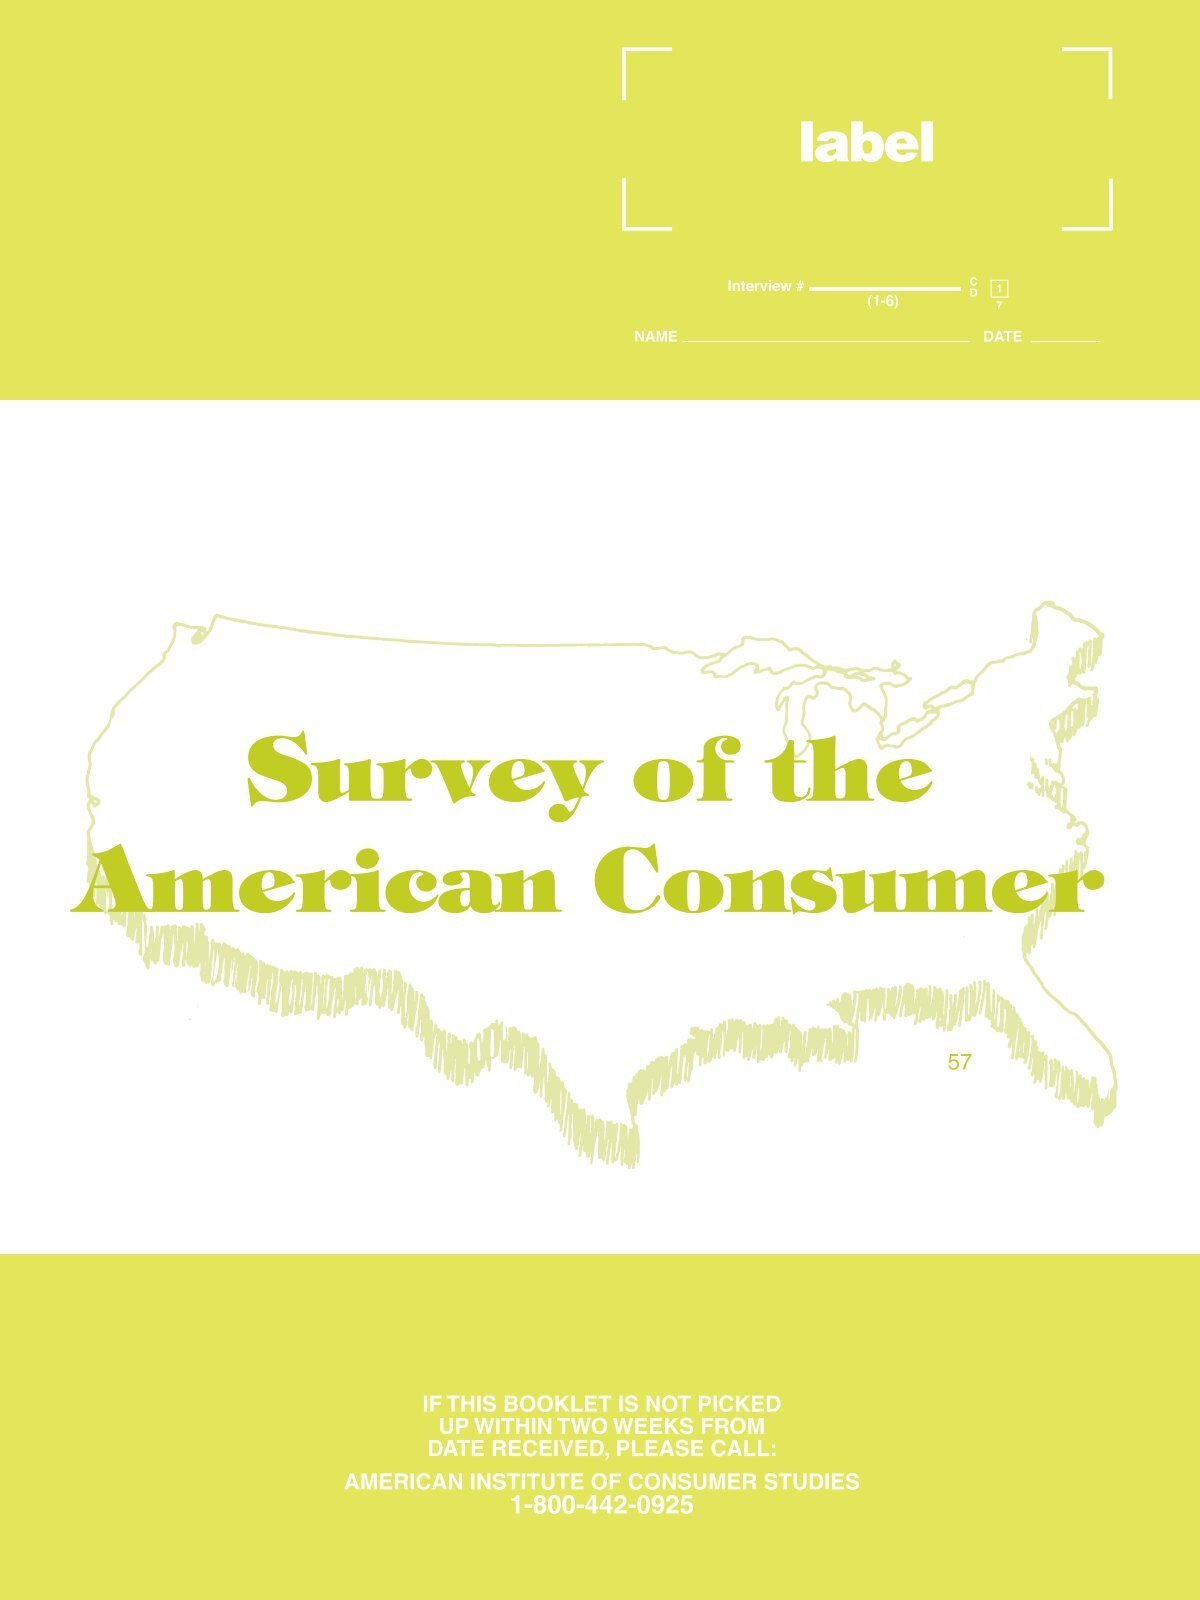 American Consumer - GfK MRI